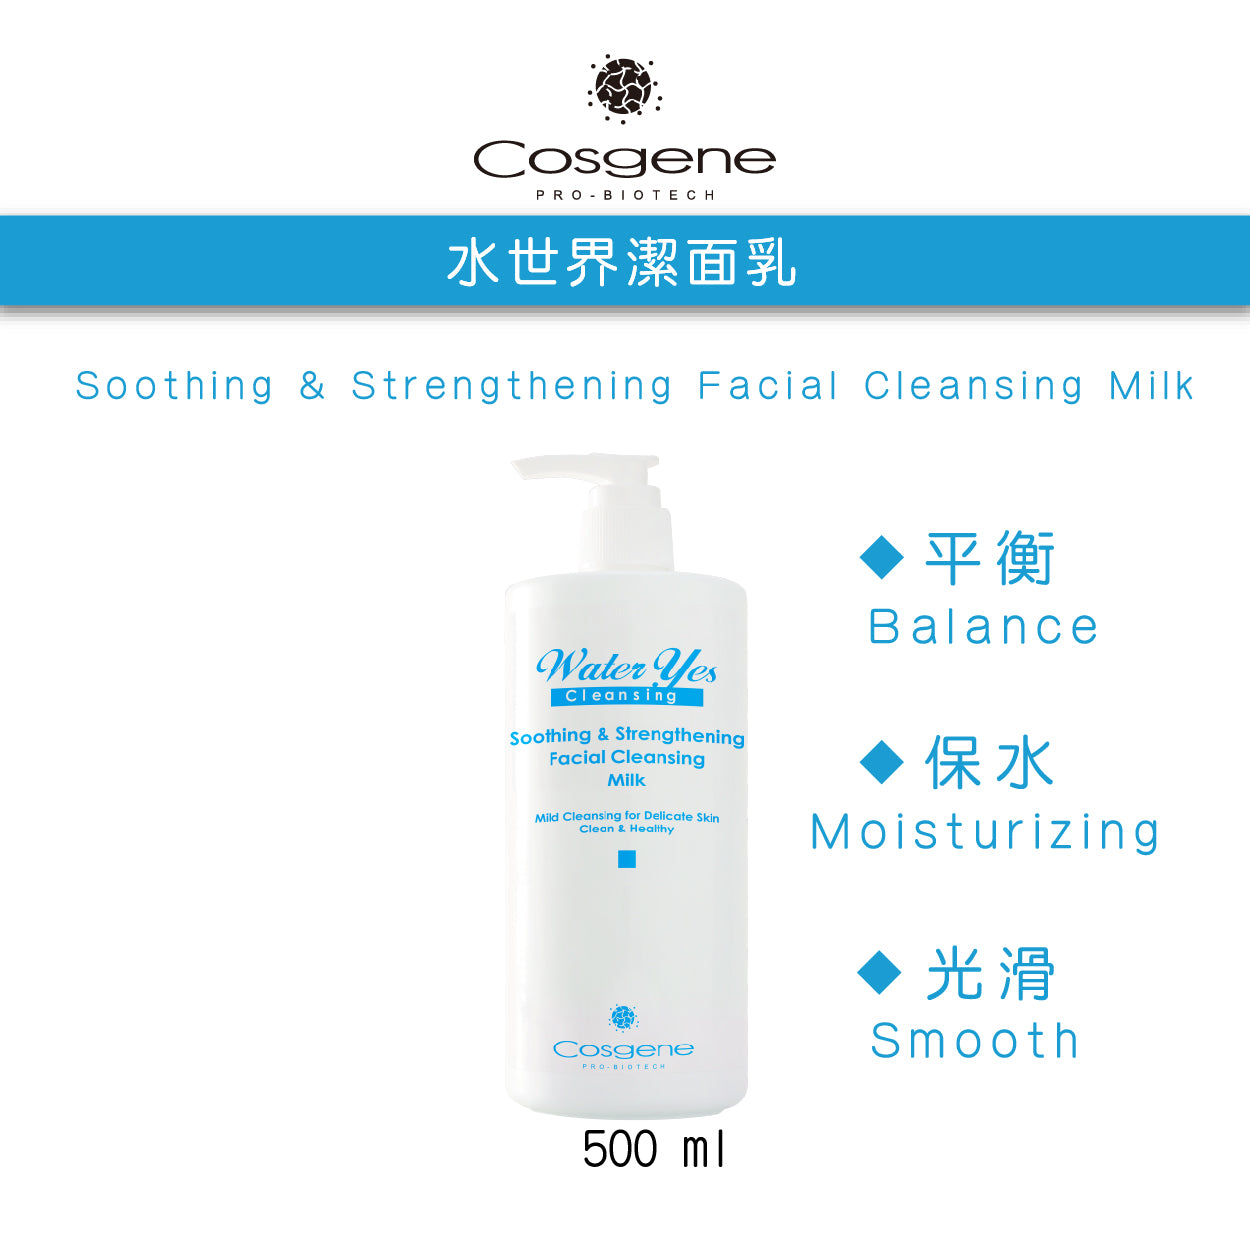 【COSGENE】水世界潔面乳 Soothing & Strengthening Facial Cleansing Milk